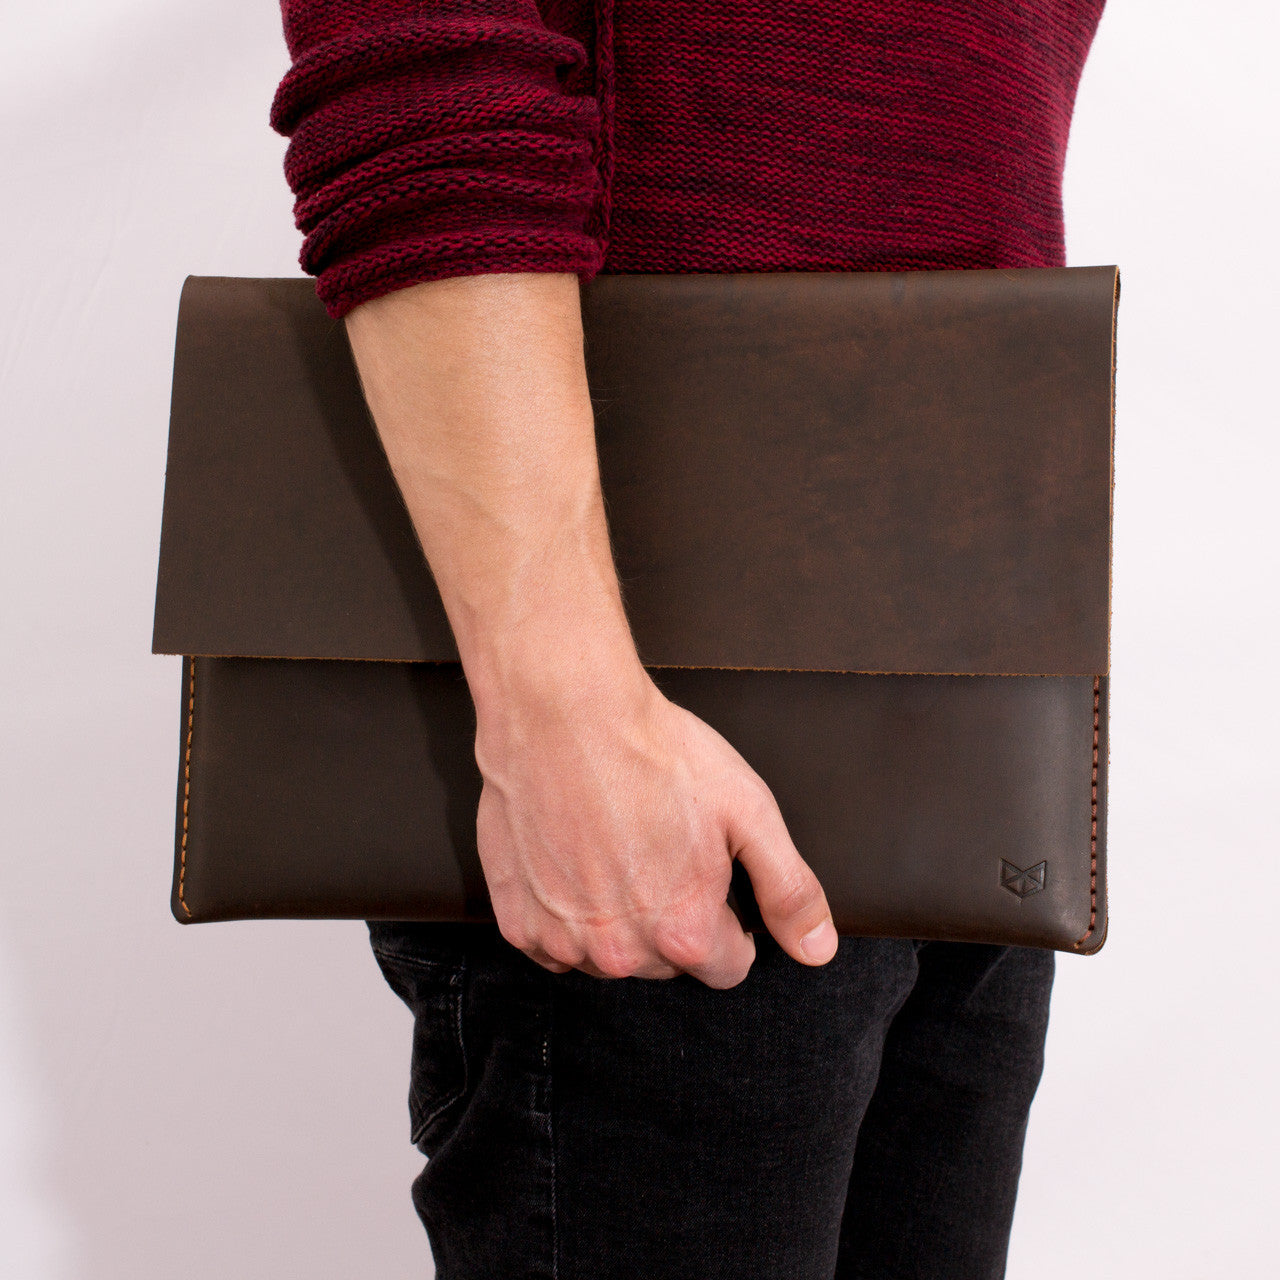 Carrying the new Lenovo Yoga Thinkpad leather sleeve